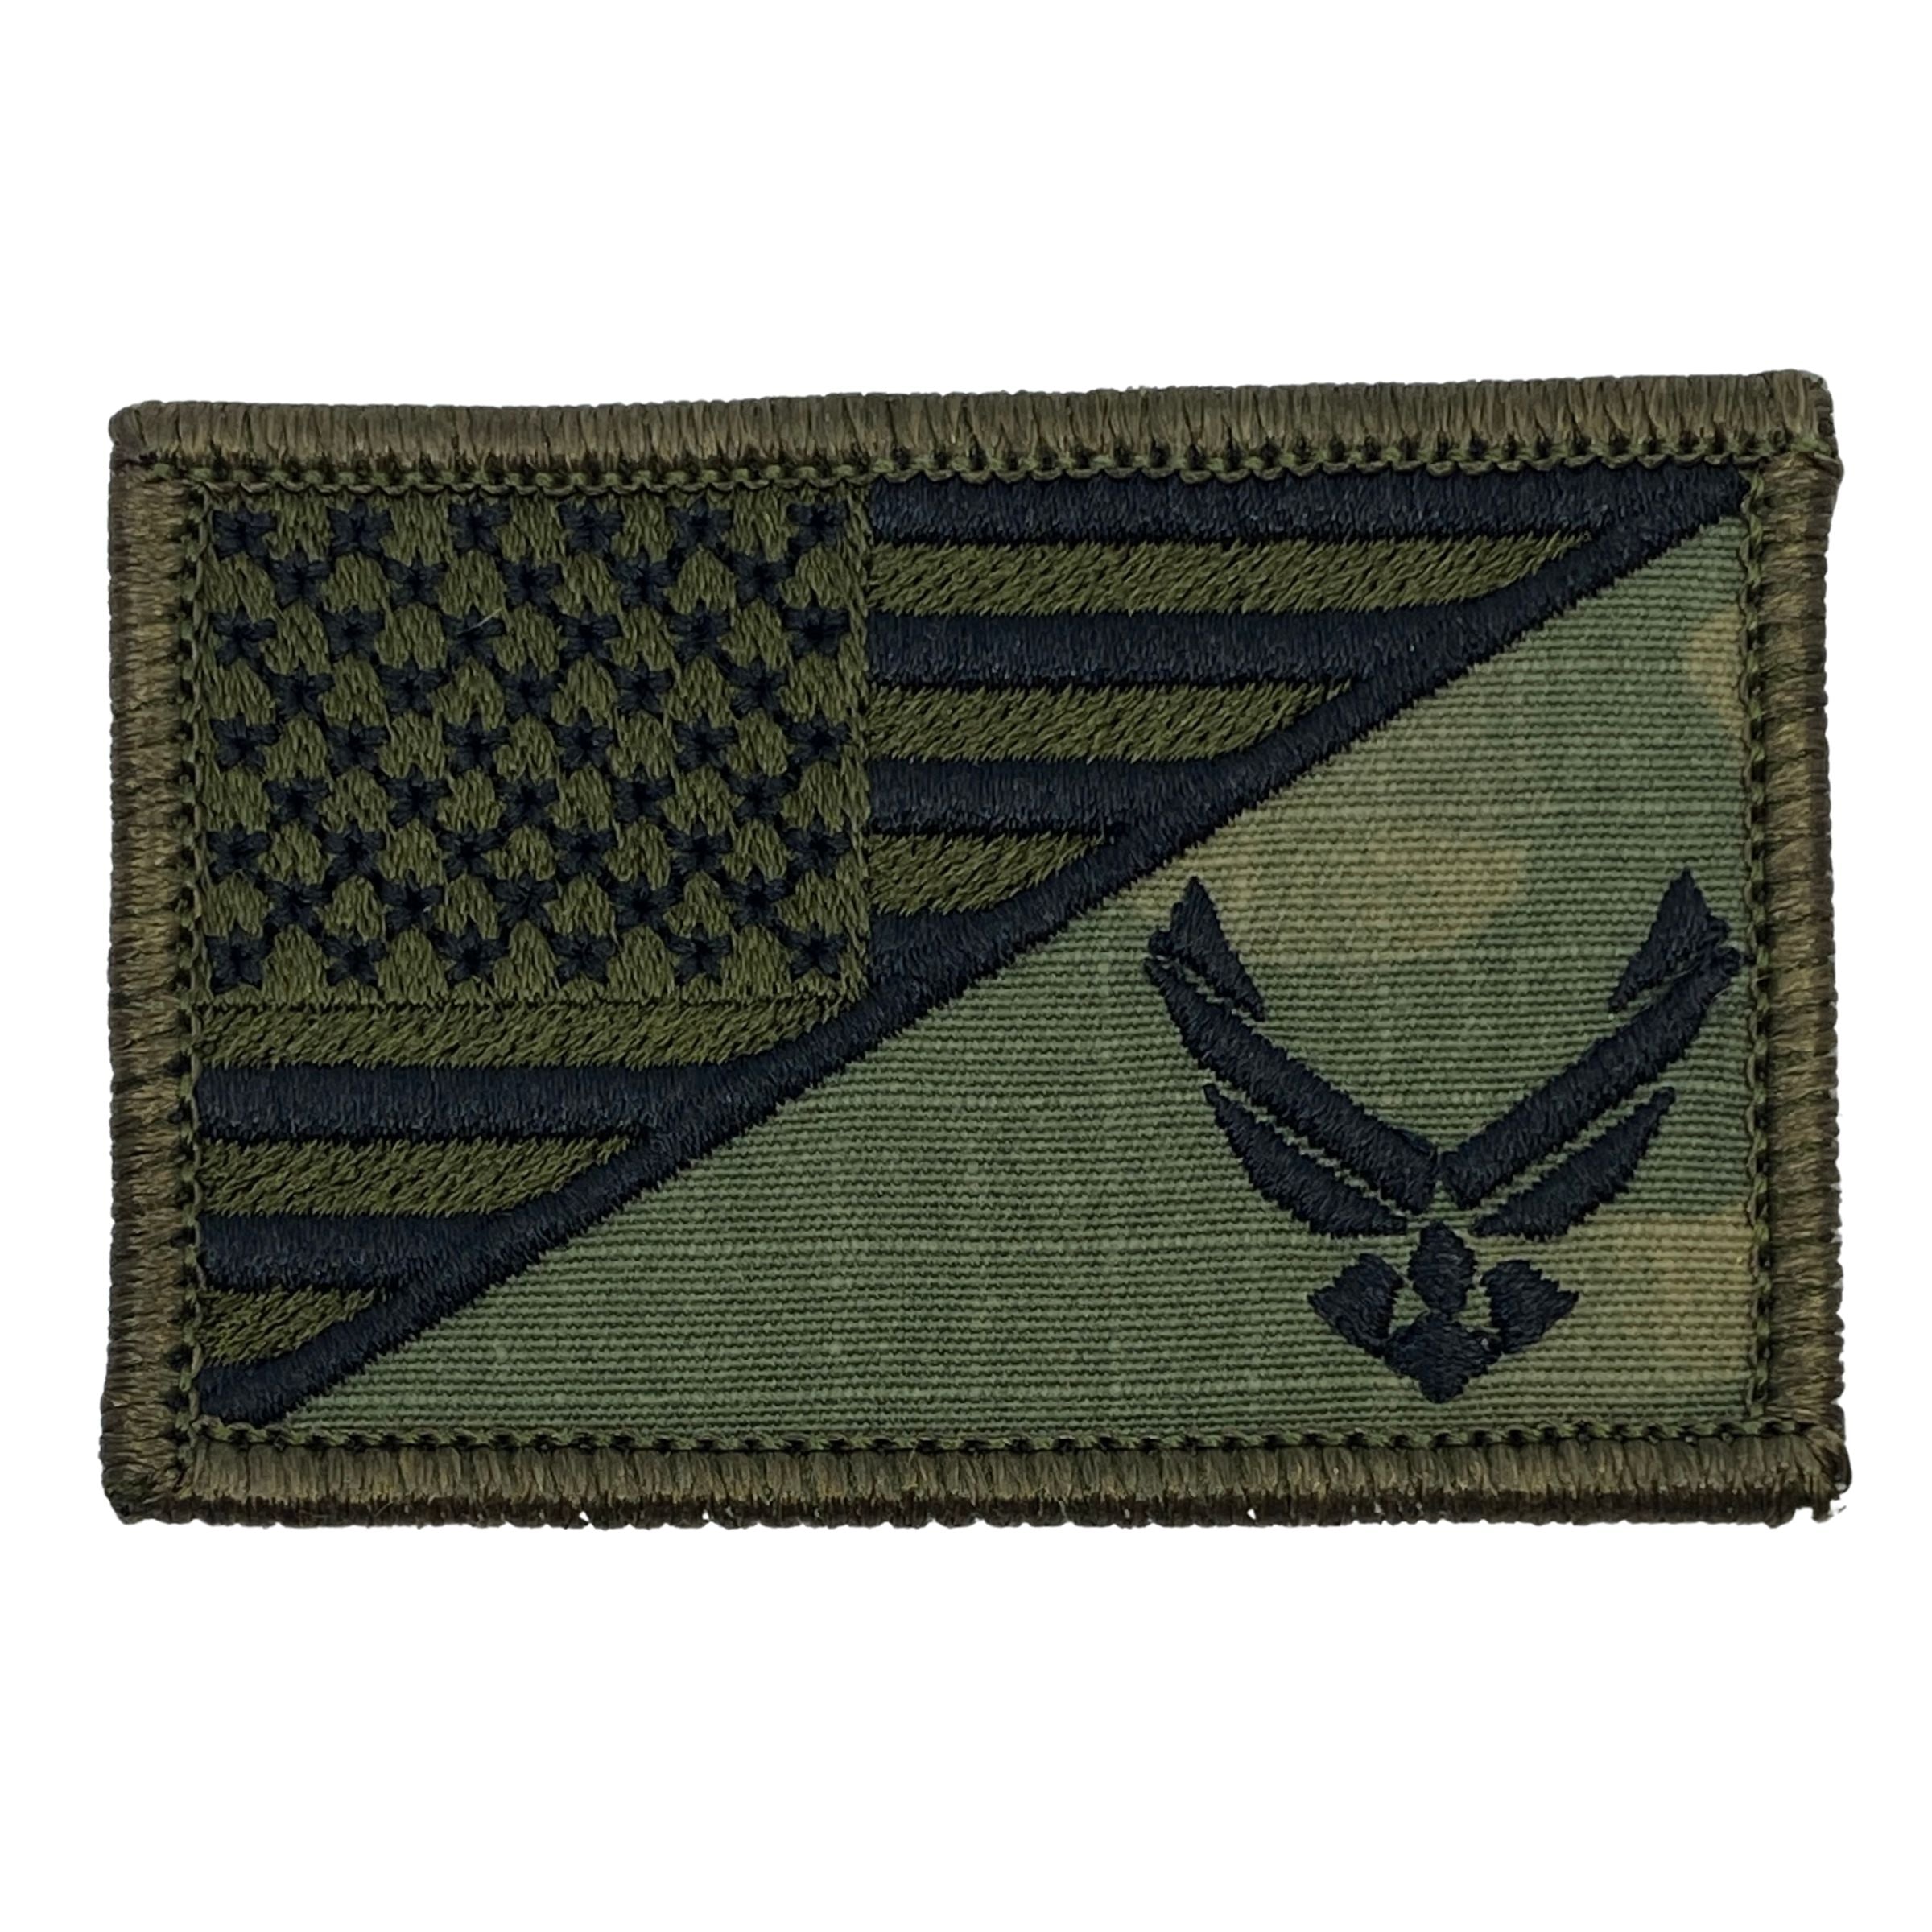 USAF UNITED STATES FLAG PATCH